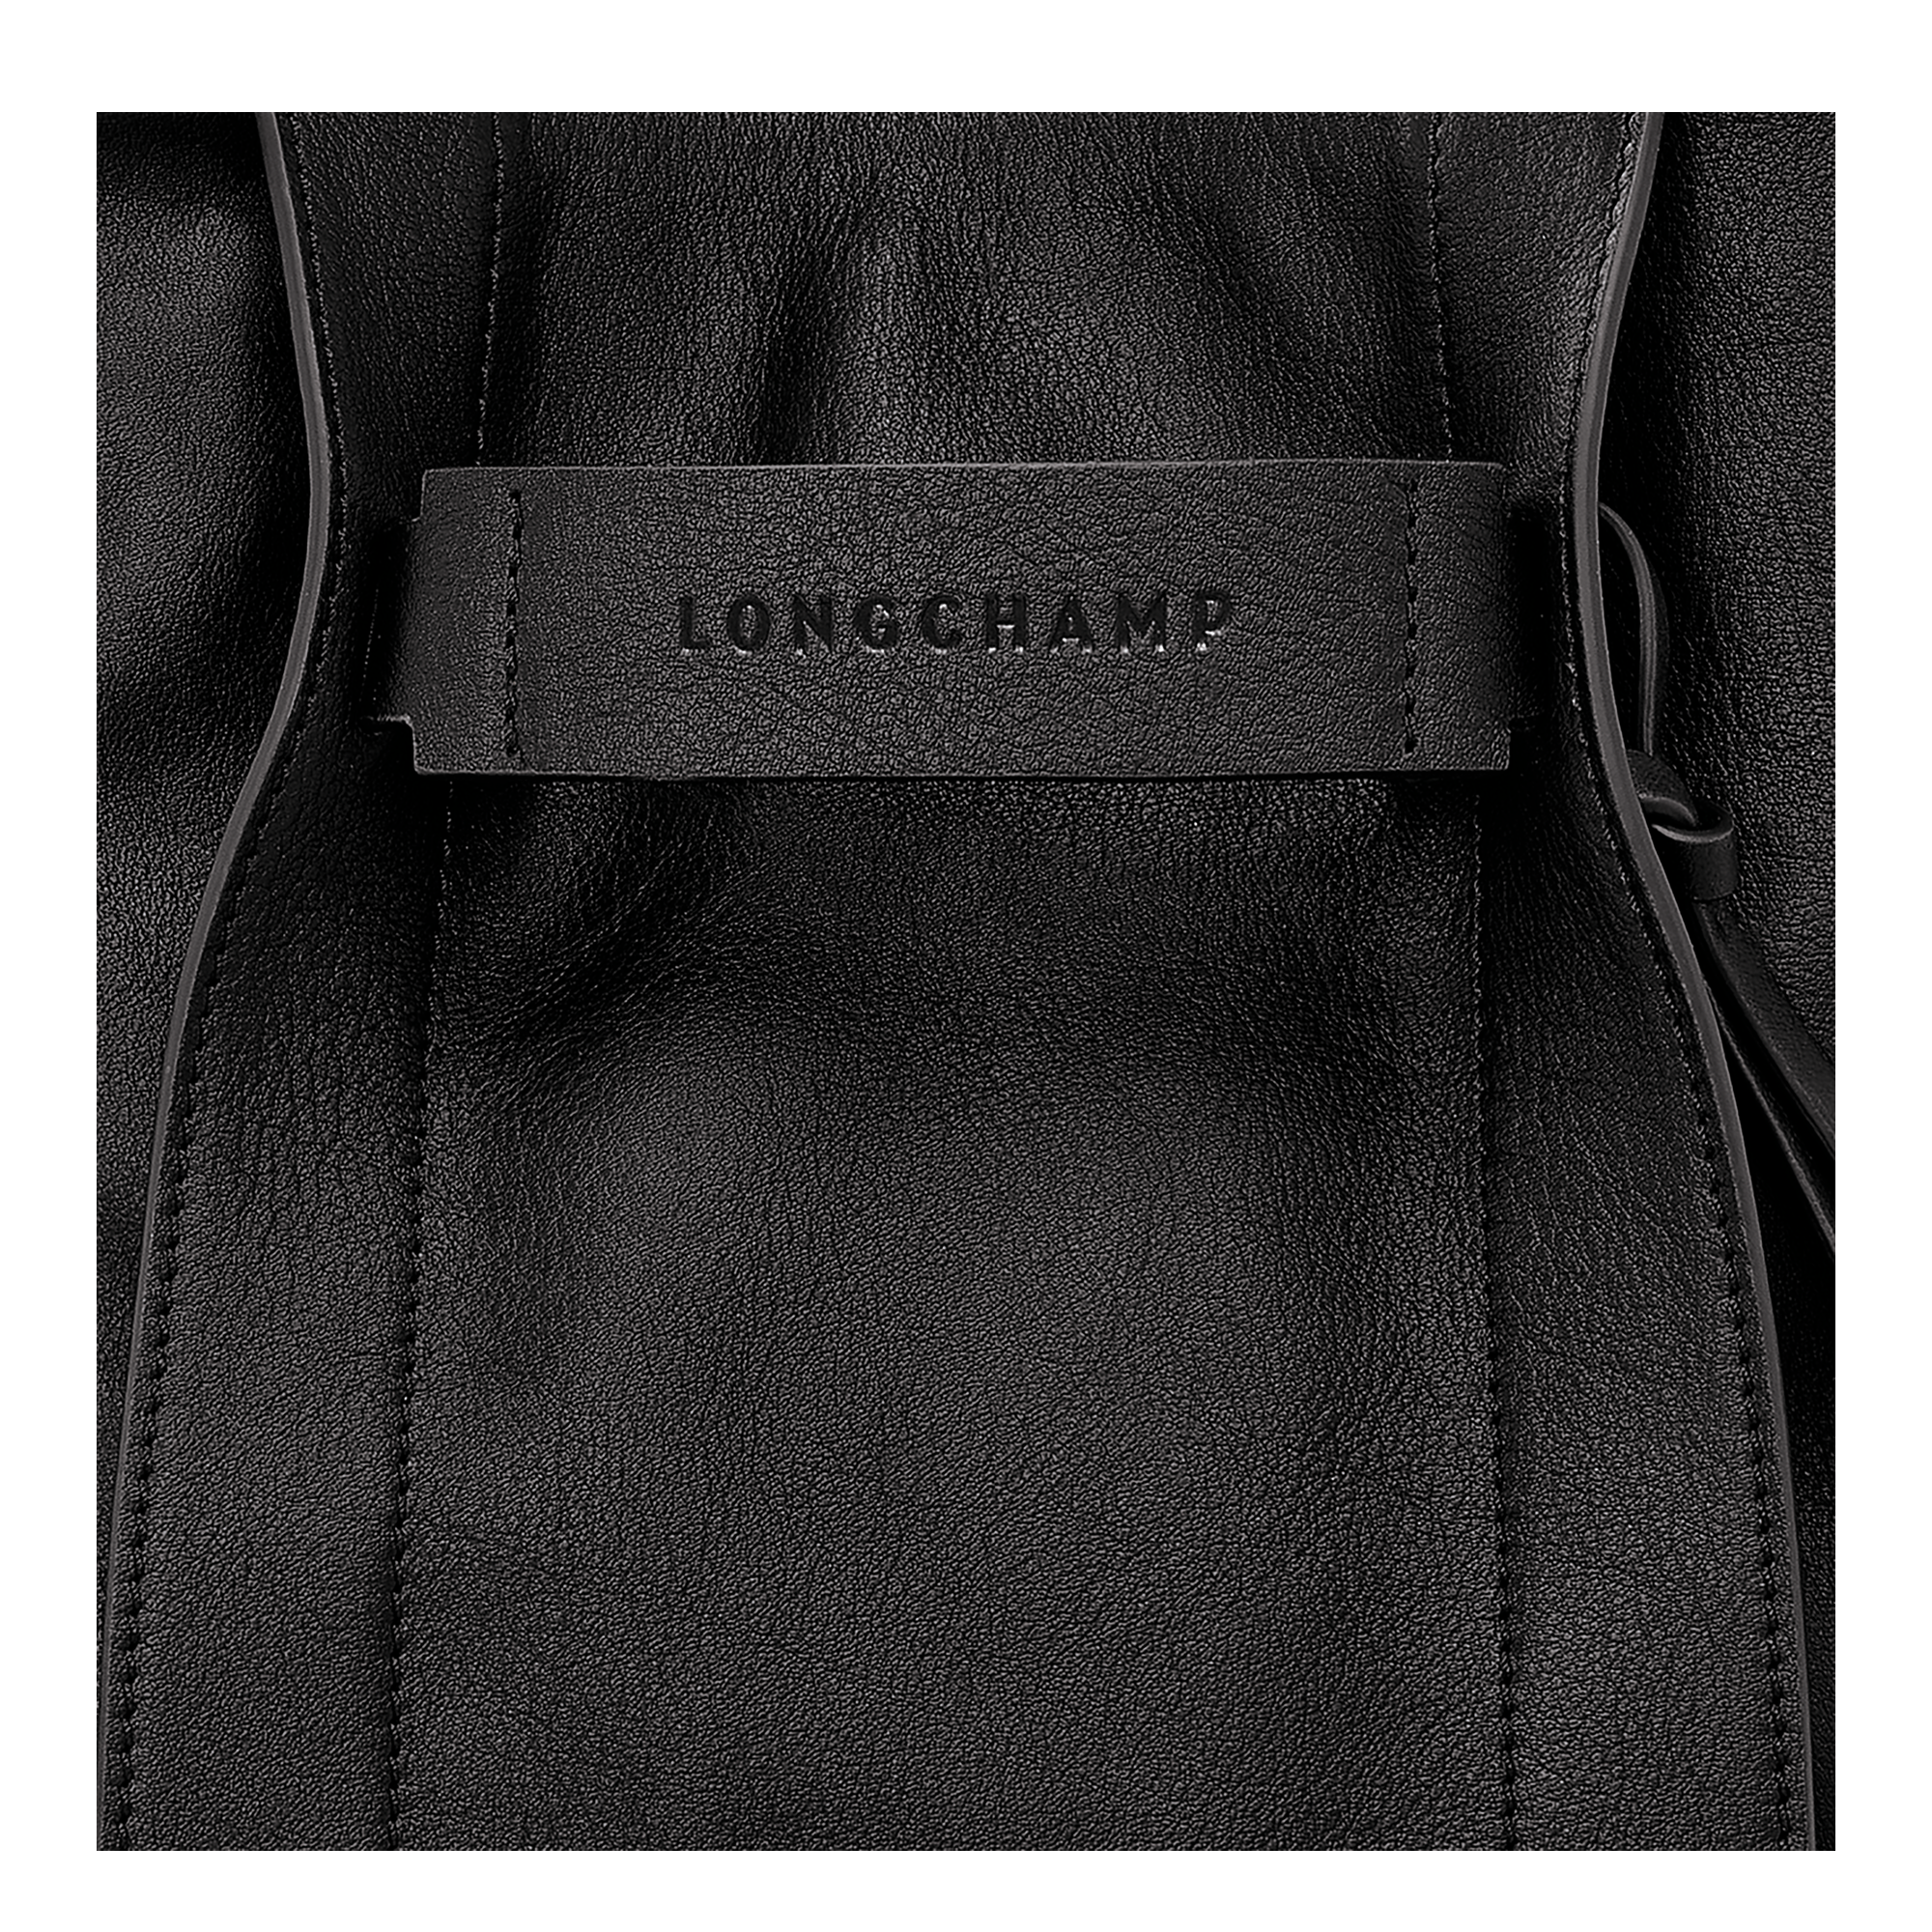 Longchamp 3D 斜挎包 S, 黑色